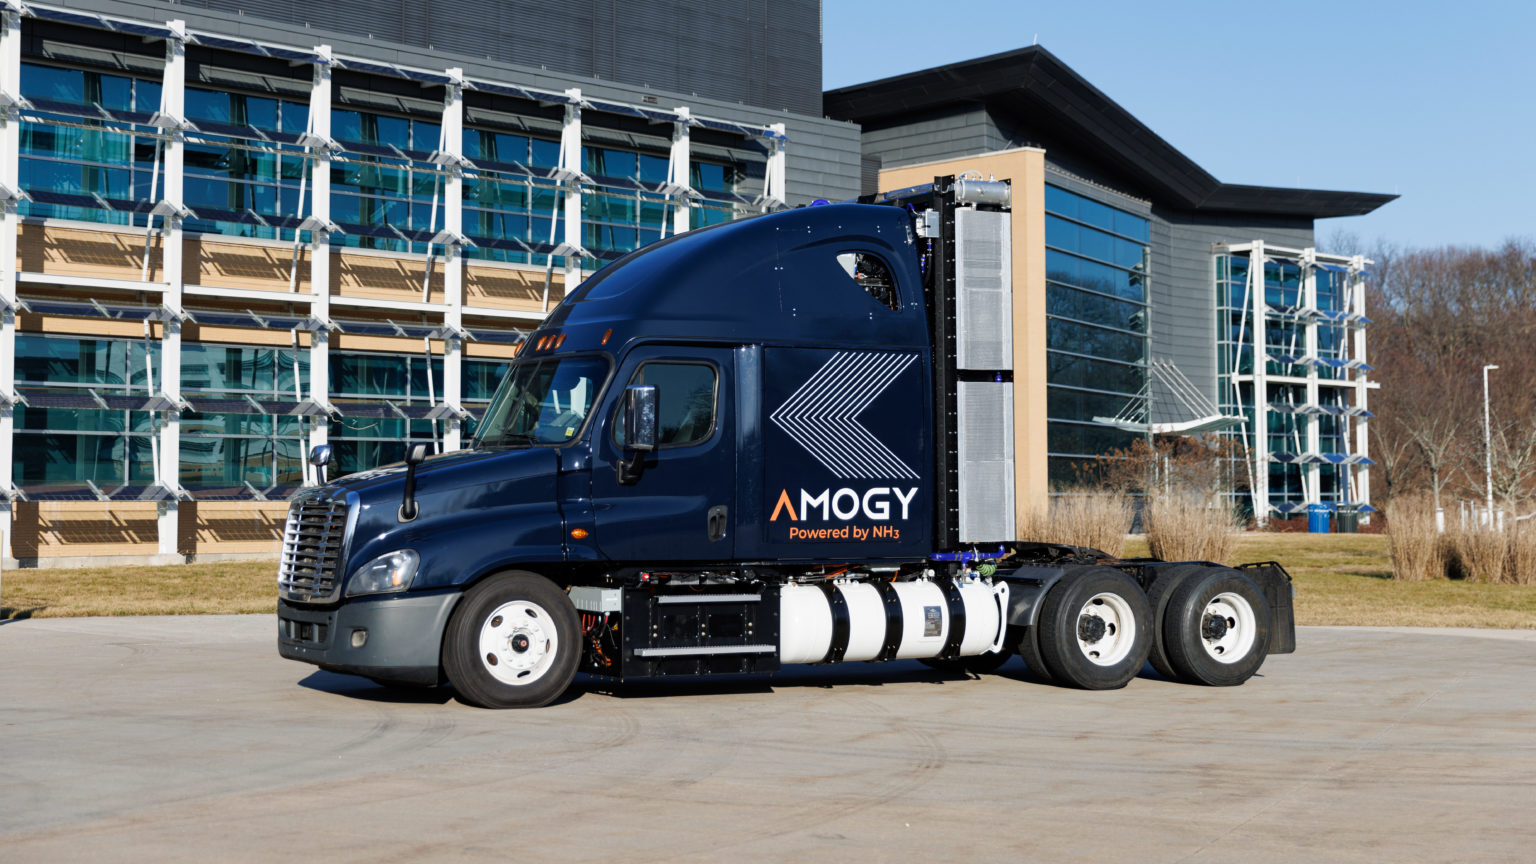 Amogy Presents Worlds First Ammonia-Powered Zero-Emission Semi Truck